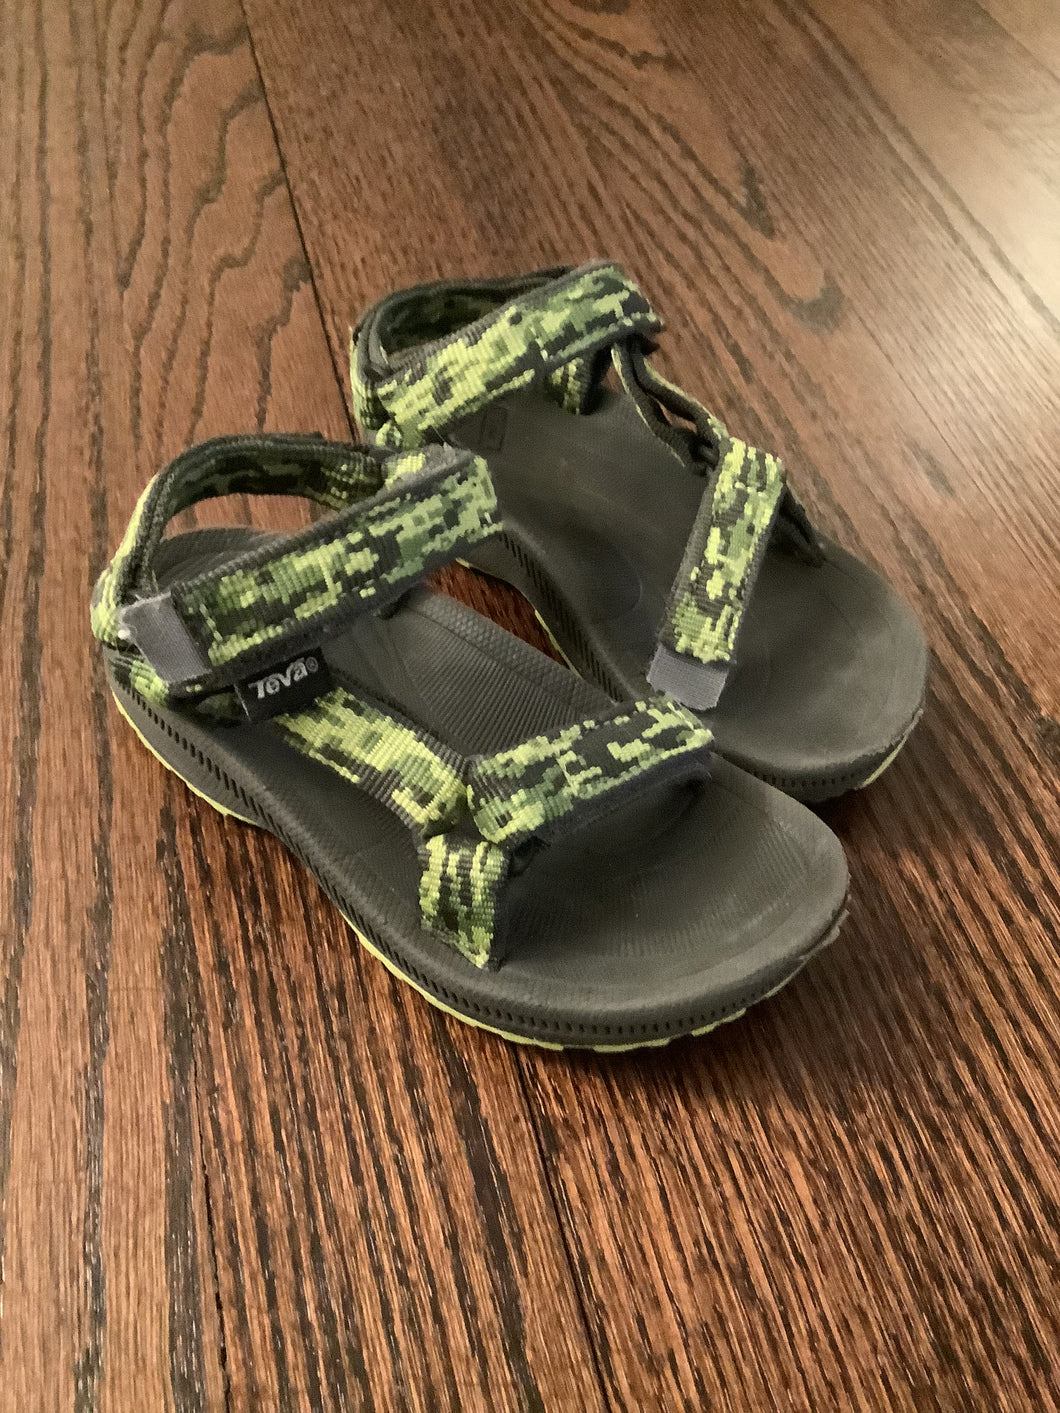 Tegu Olive Green Water Sandals 7